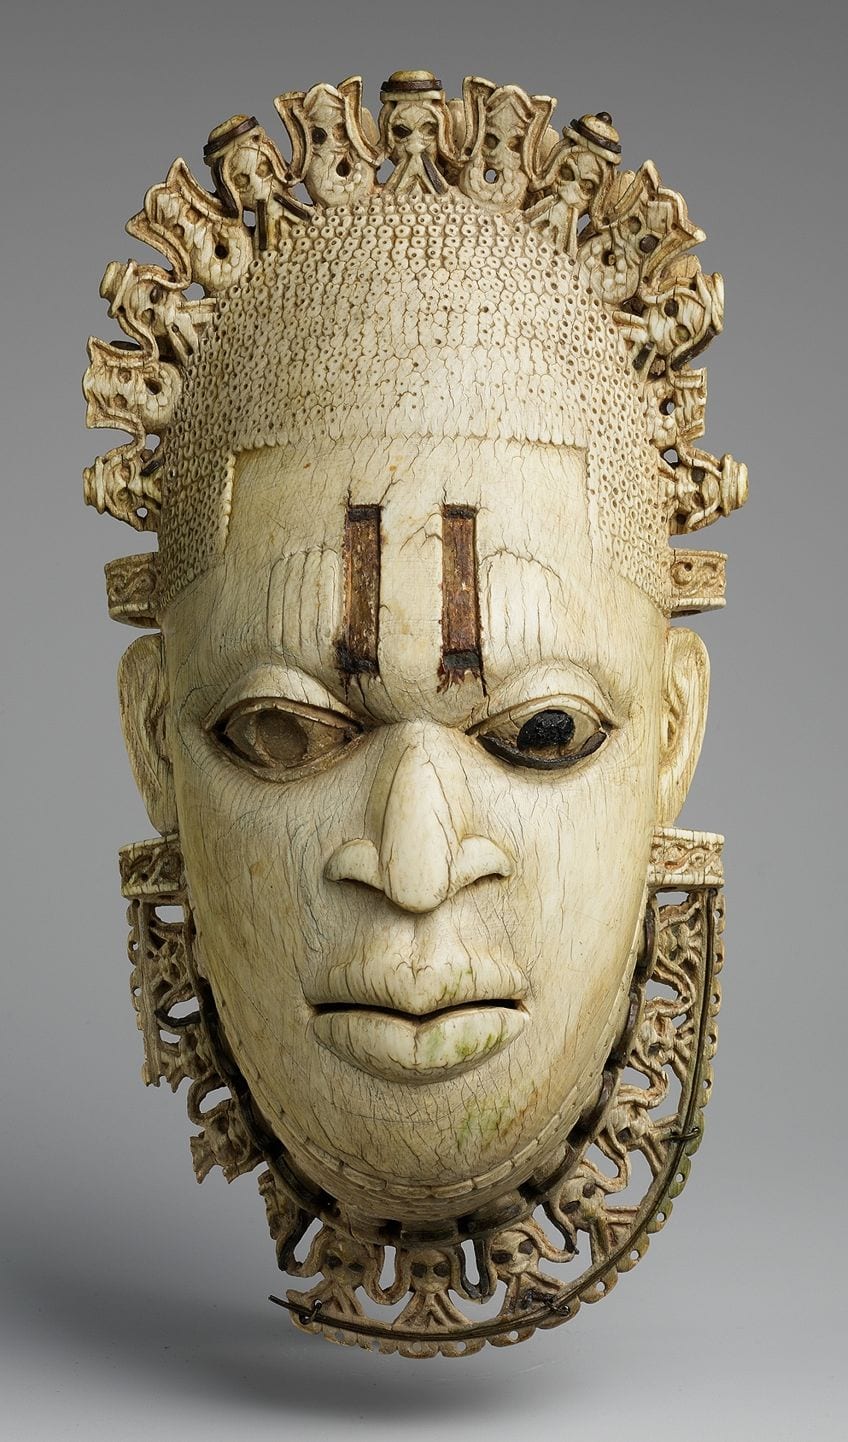 African Sculpture of a Mask